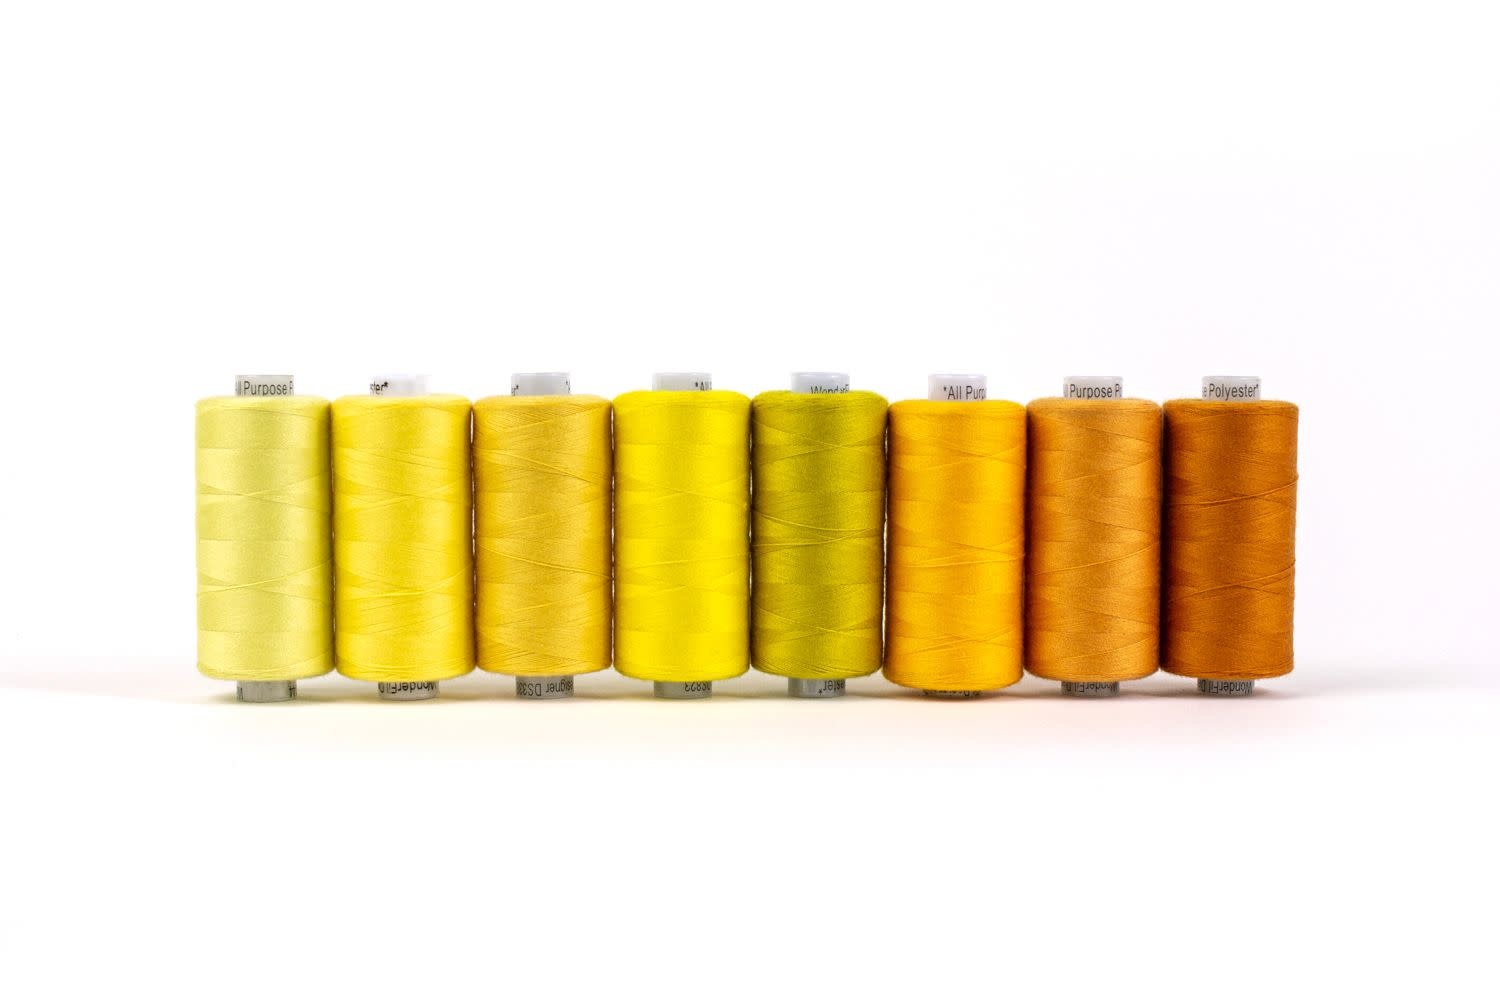 WonderFil Designer Designer Sewing Thread Pack 08 1000m (8 spools)